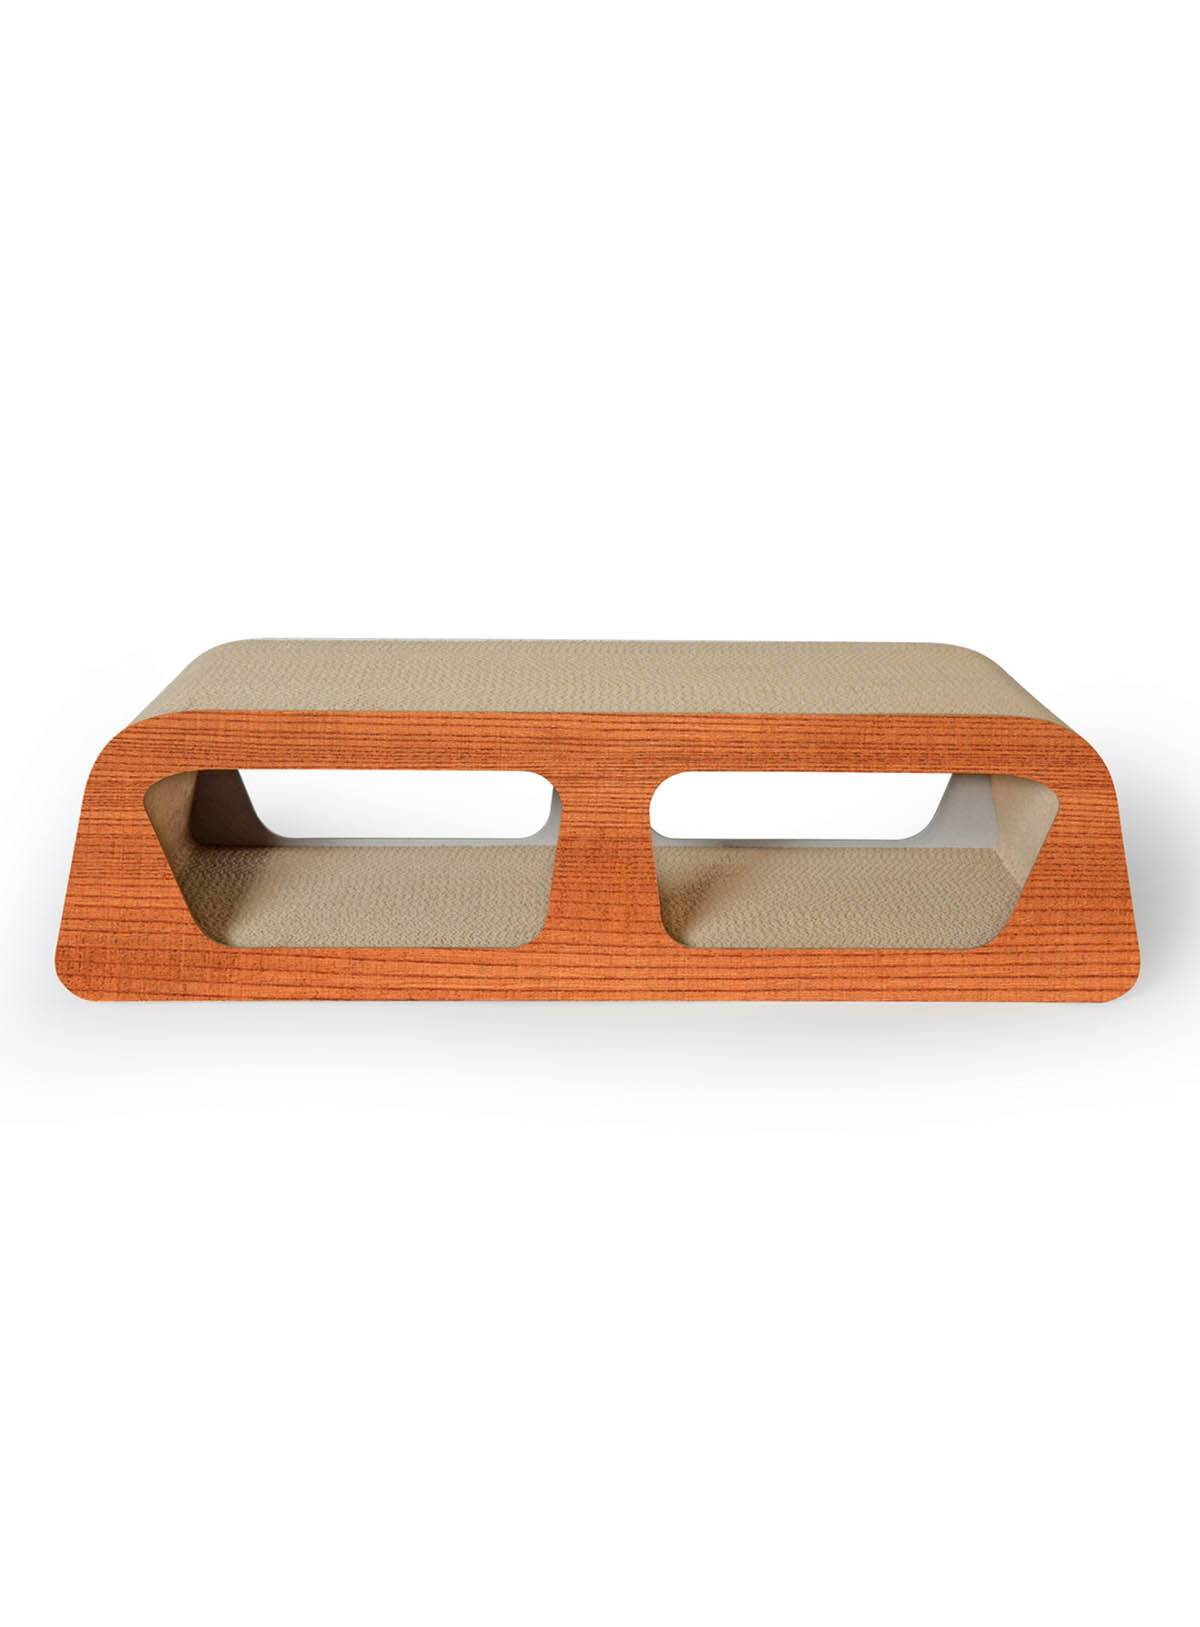 Hot New Products Cat Scratcher Corrugated Cardboard -
 2015 Design Cat Toys Cat Scratchers – YJ Display